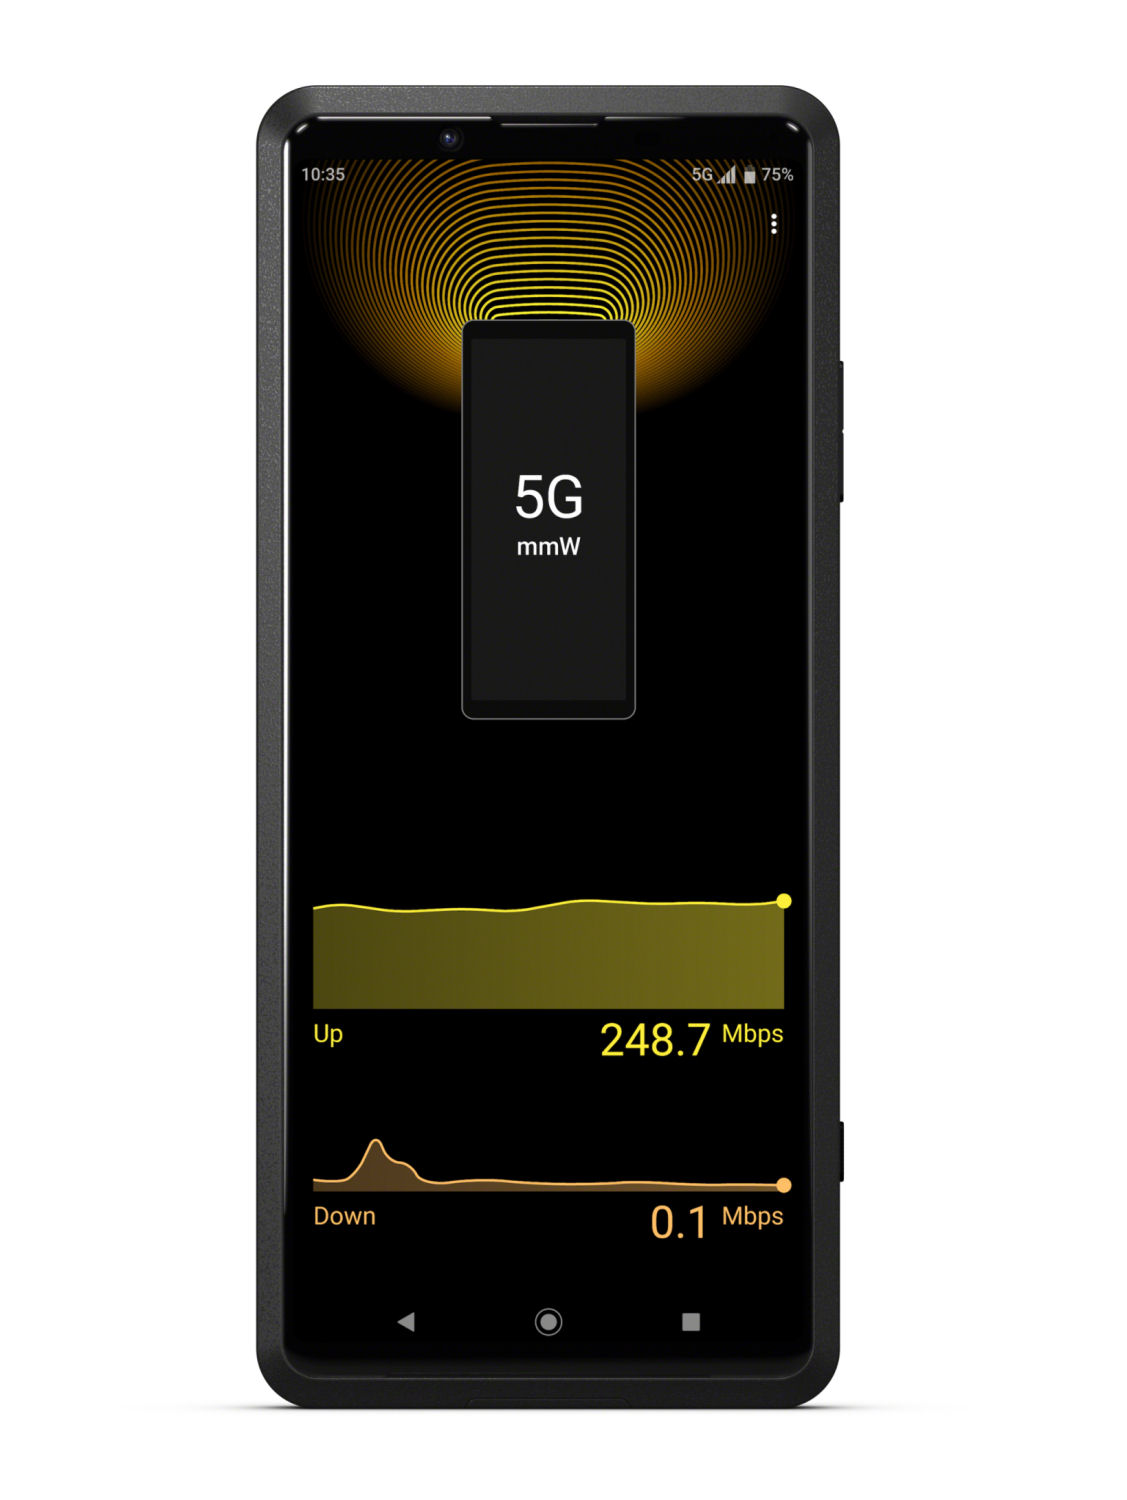 5Gミリ波対応の「Xperia PRO」が2月10日発売 約22万円でプロユースを想定 - ITmedia Mobile